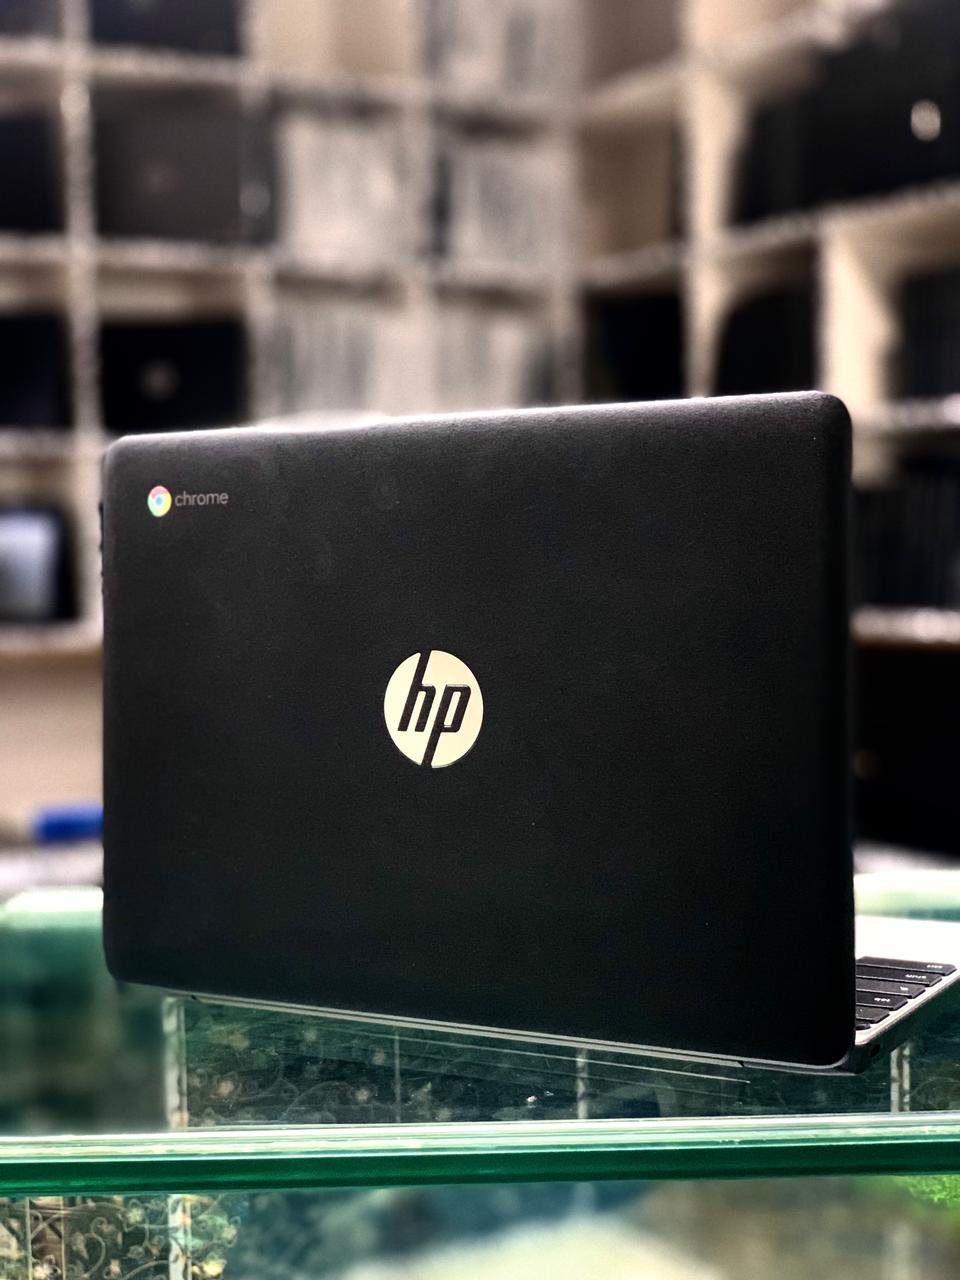 HP Chromebook 14 G4 Laptop Price in Pakistan - Laptop Mall